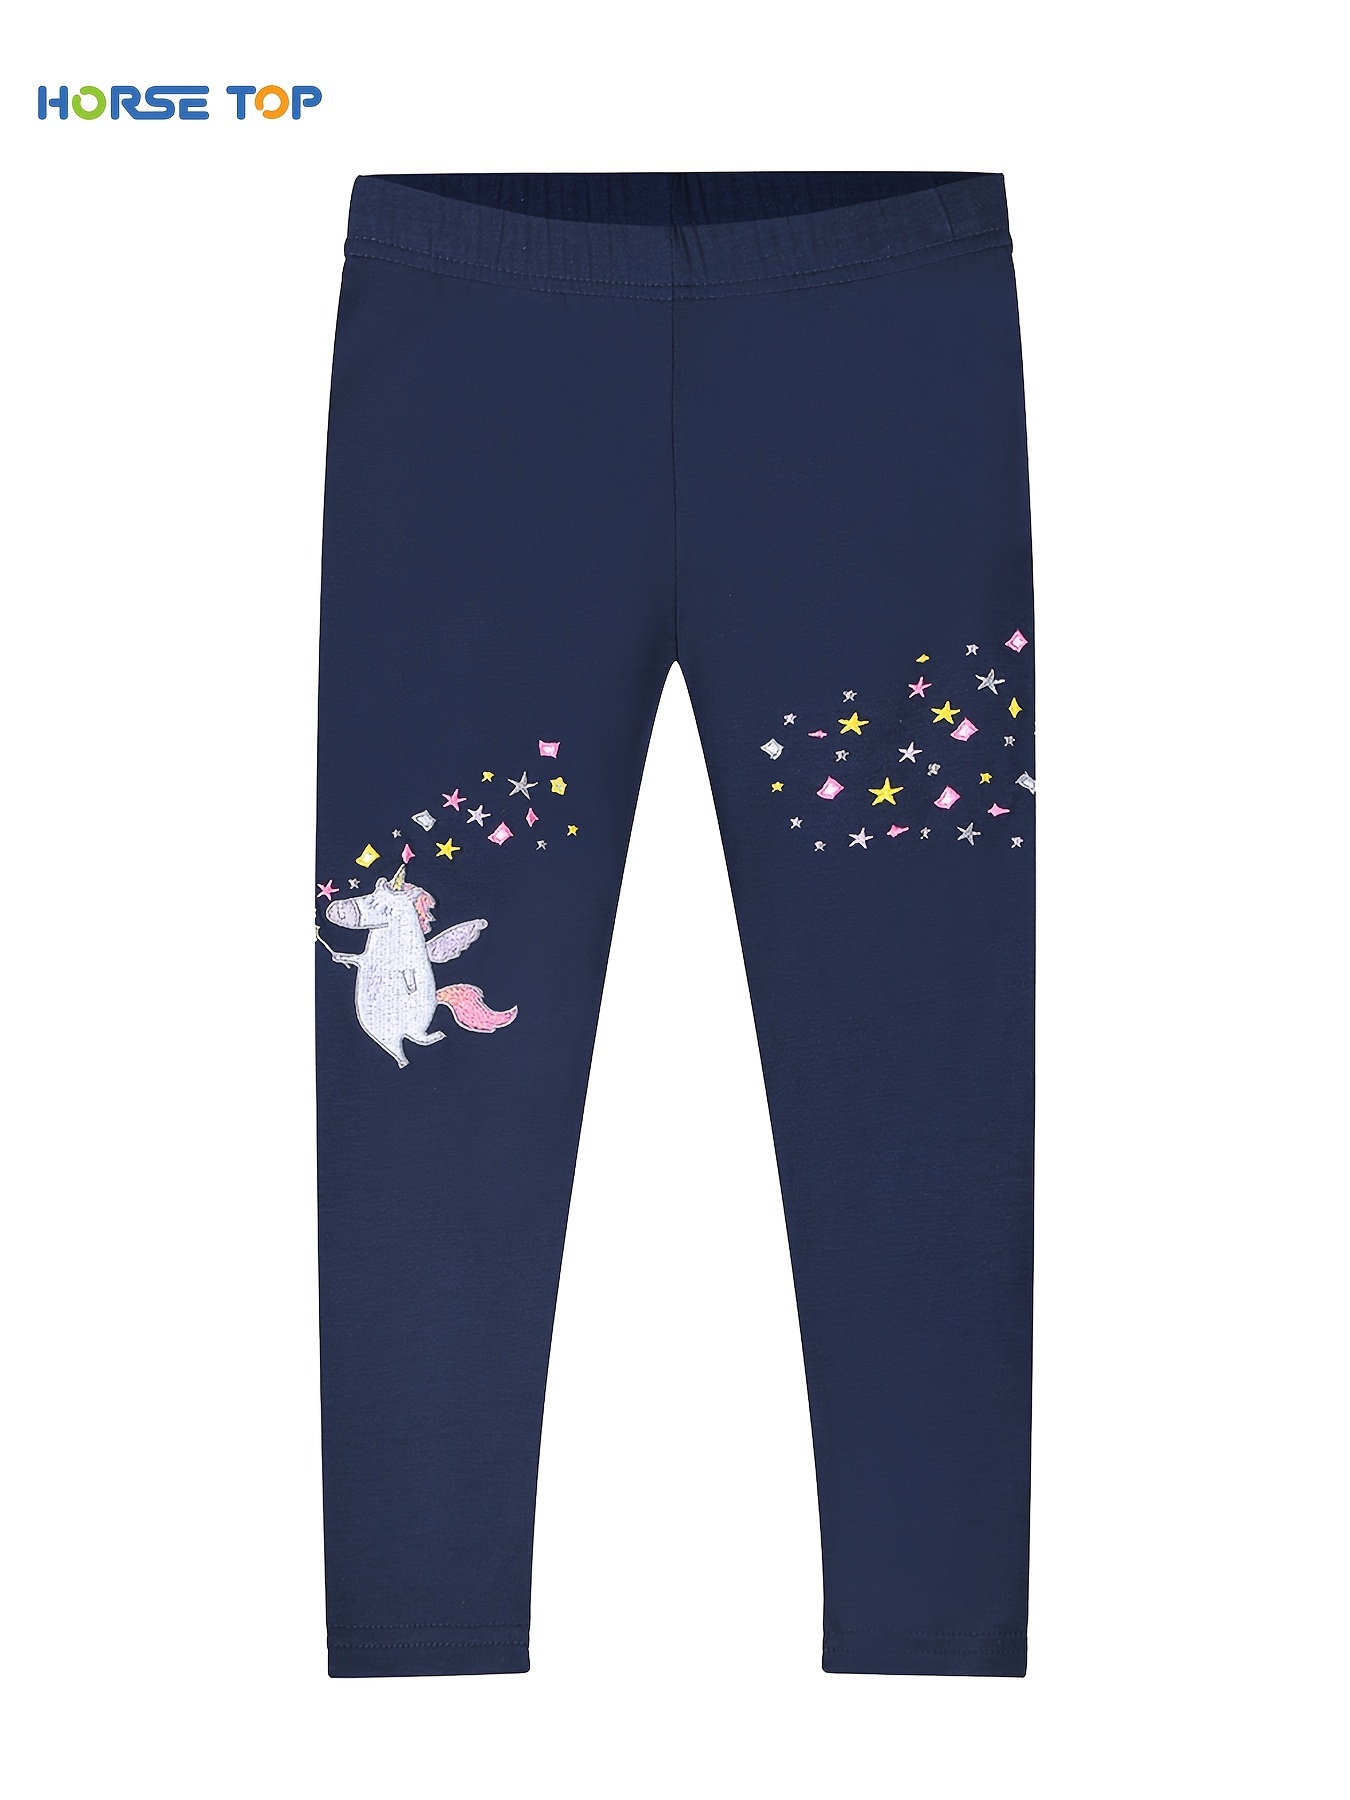 Girls Cartoon Unicorn Leggings Contrast Color Legging Pants  Spring/Summer/Fall Kids Clothes